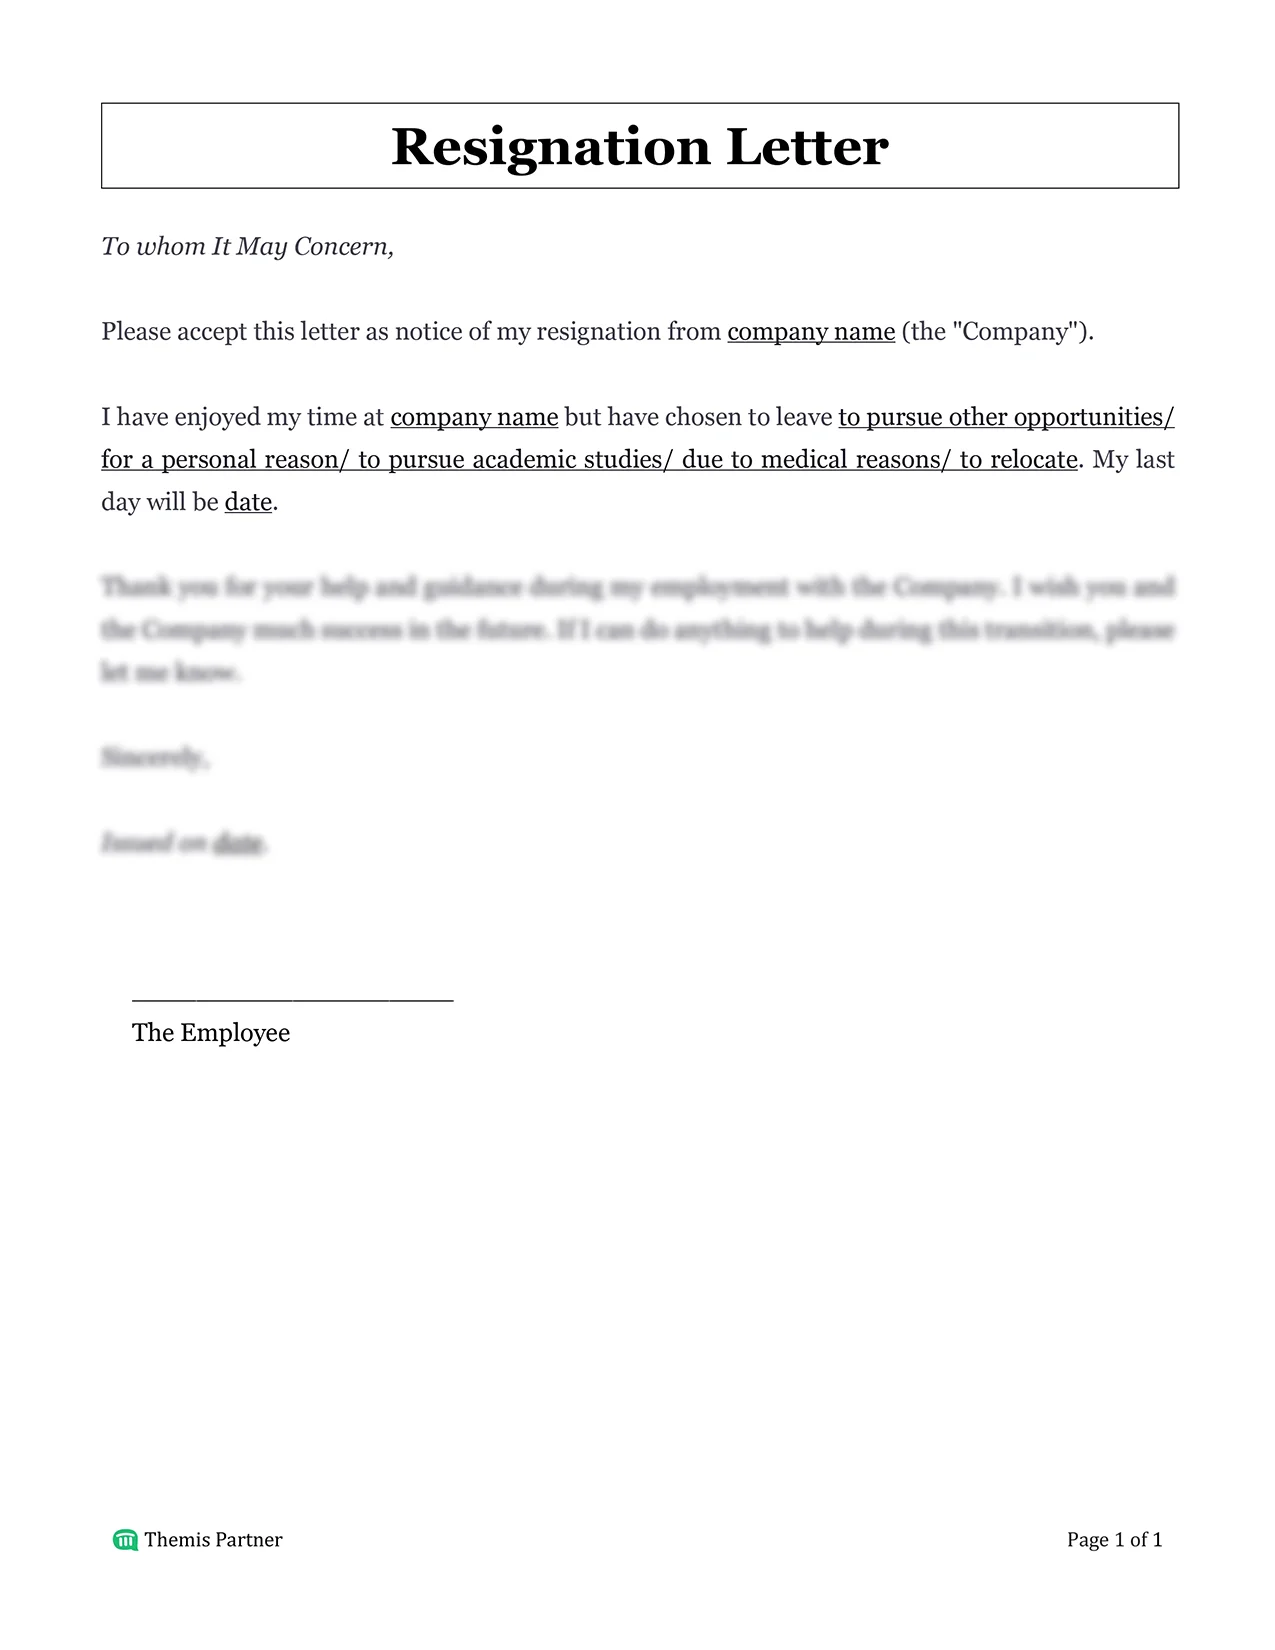 Employee resignation letter Malaysia 1